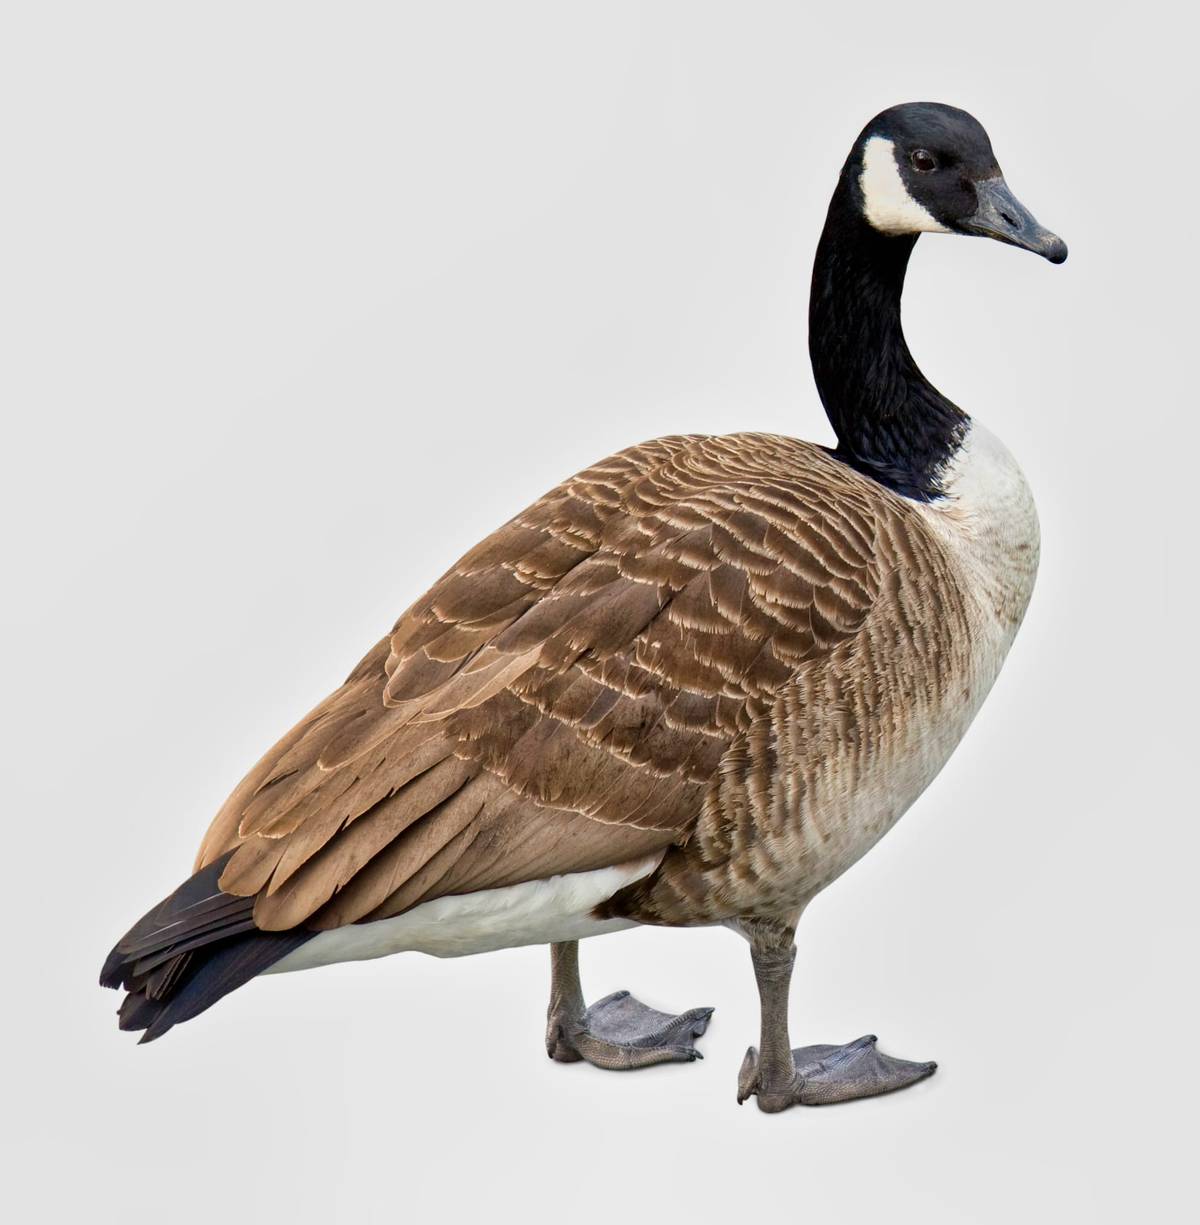 Canada goose species portrait